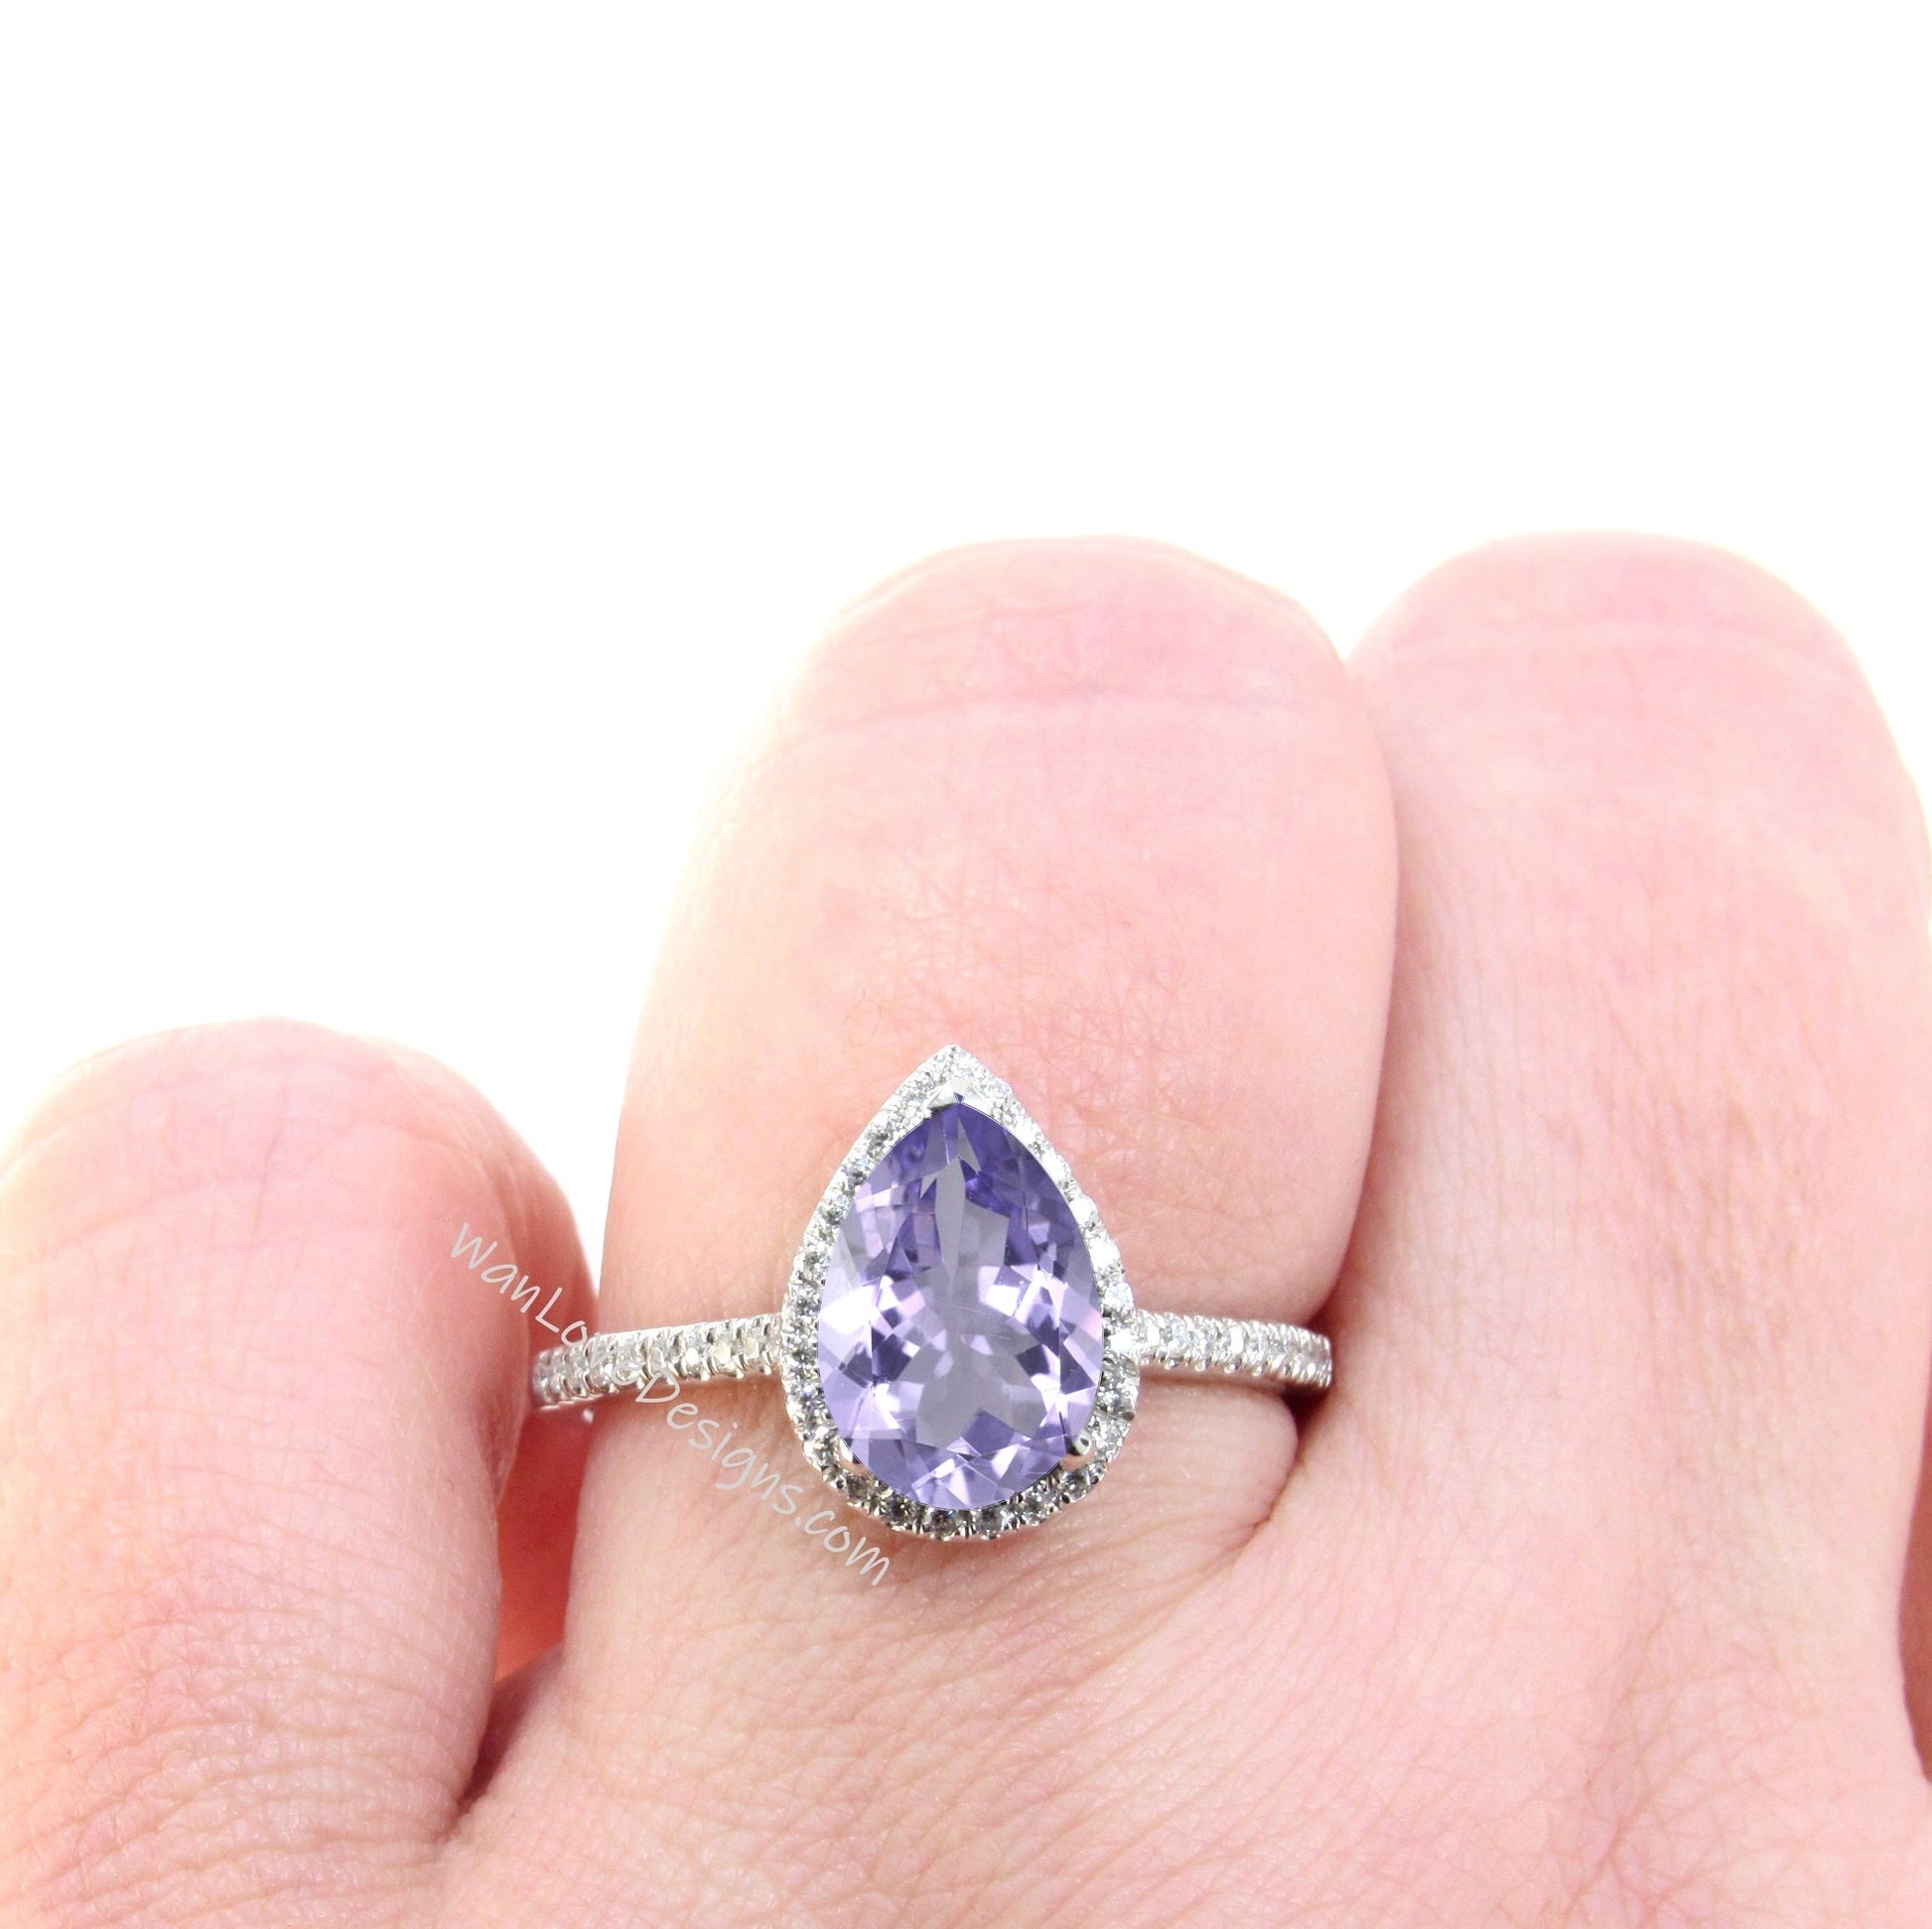 Vintage Pear shaped Lavender Amethyst Engagement Ring, Pear Cut 14k Rose Gold Diamond Halo Ring, Wedding Ring Anniversary Ring Proposal Ring